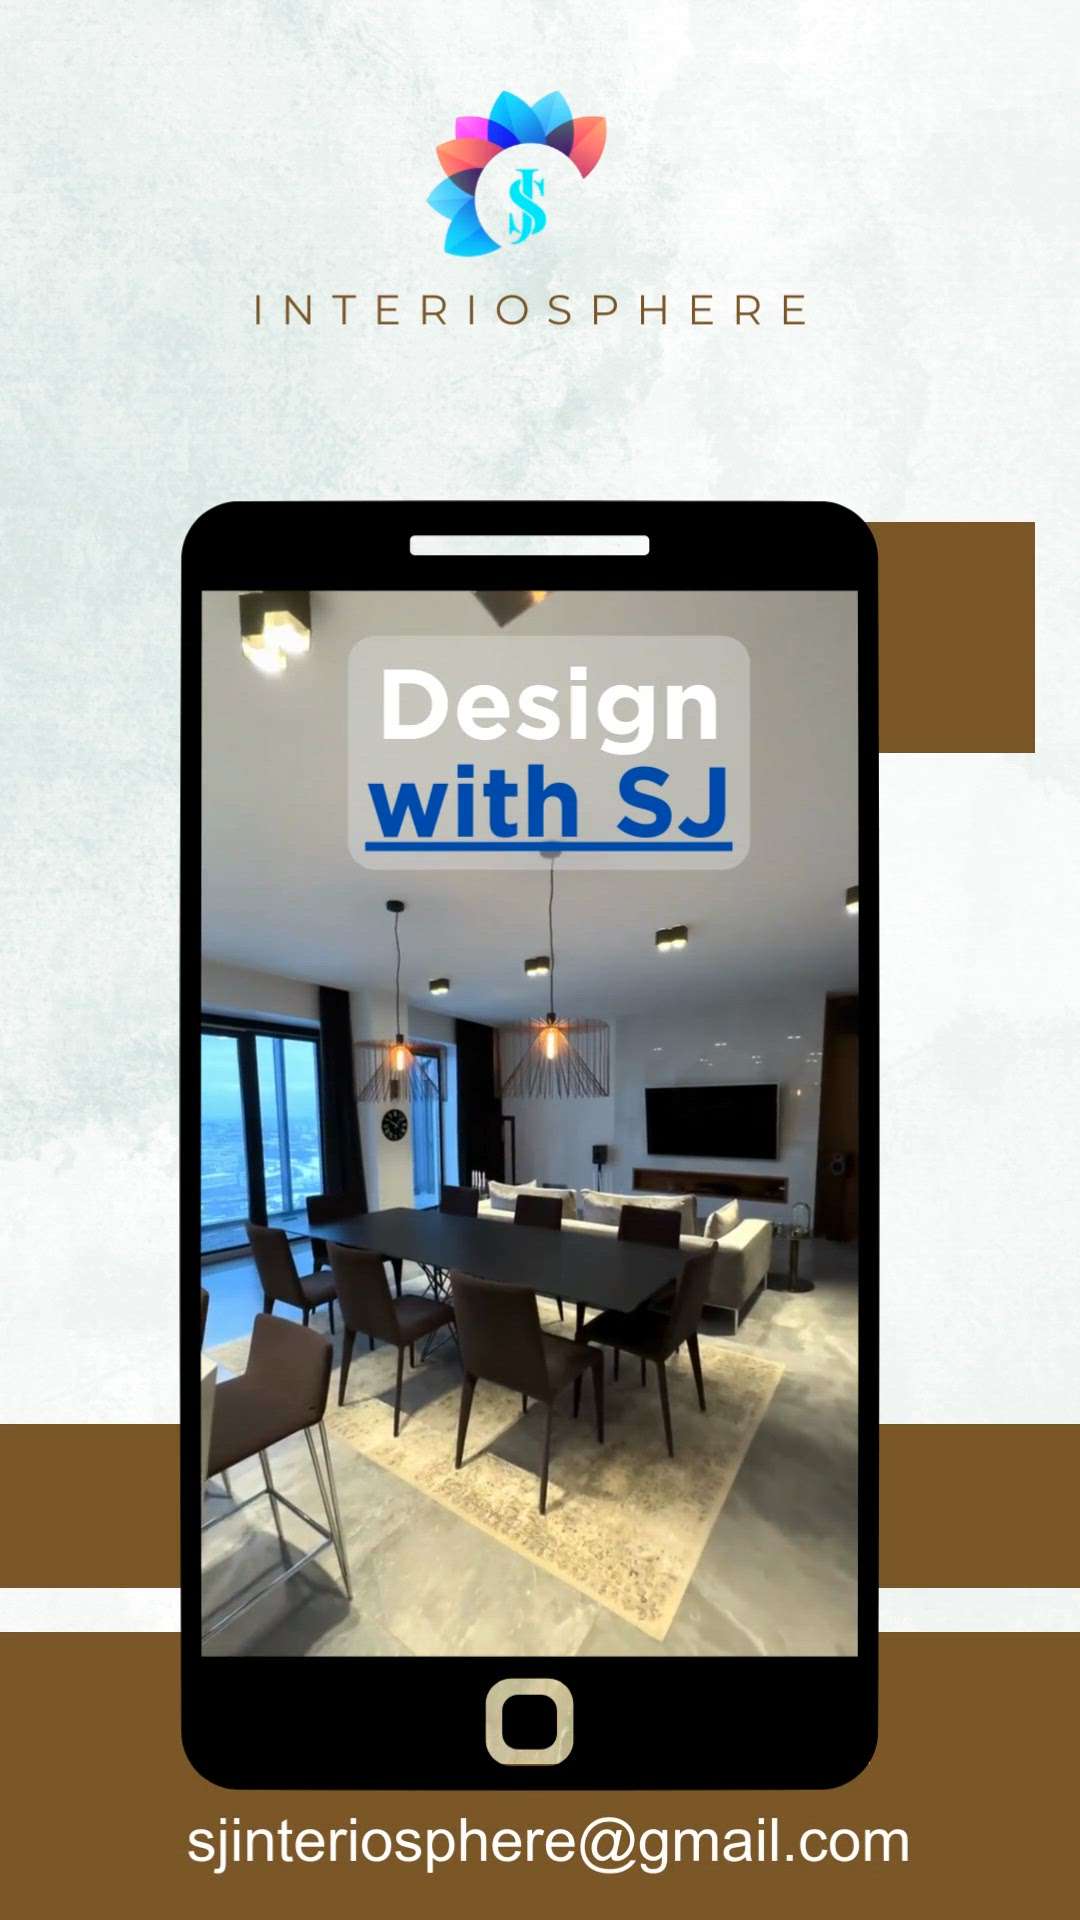 Contact Us for Interior work✨🏠

.
.
.#kolo #reels #interior #design #home #instagramreels